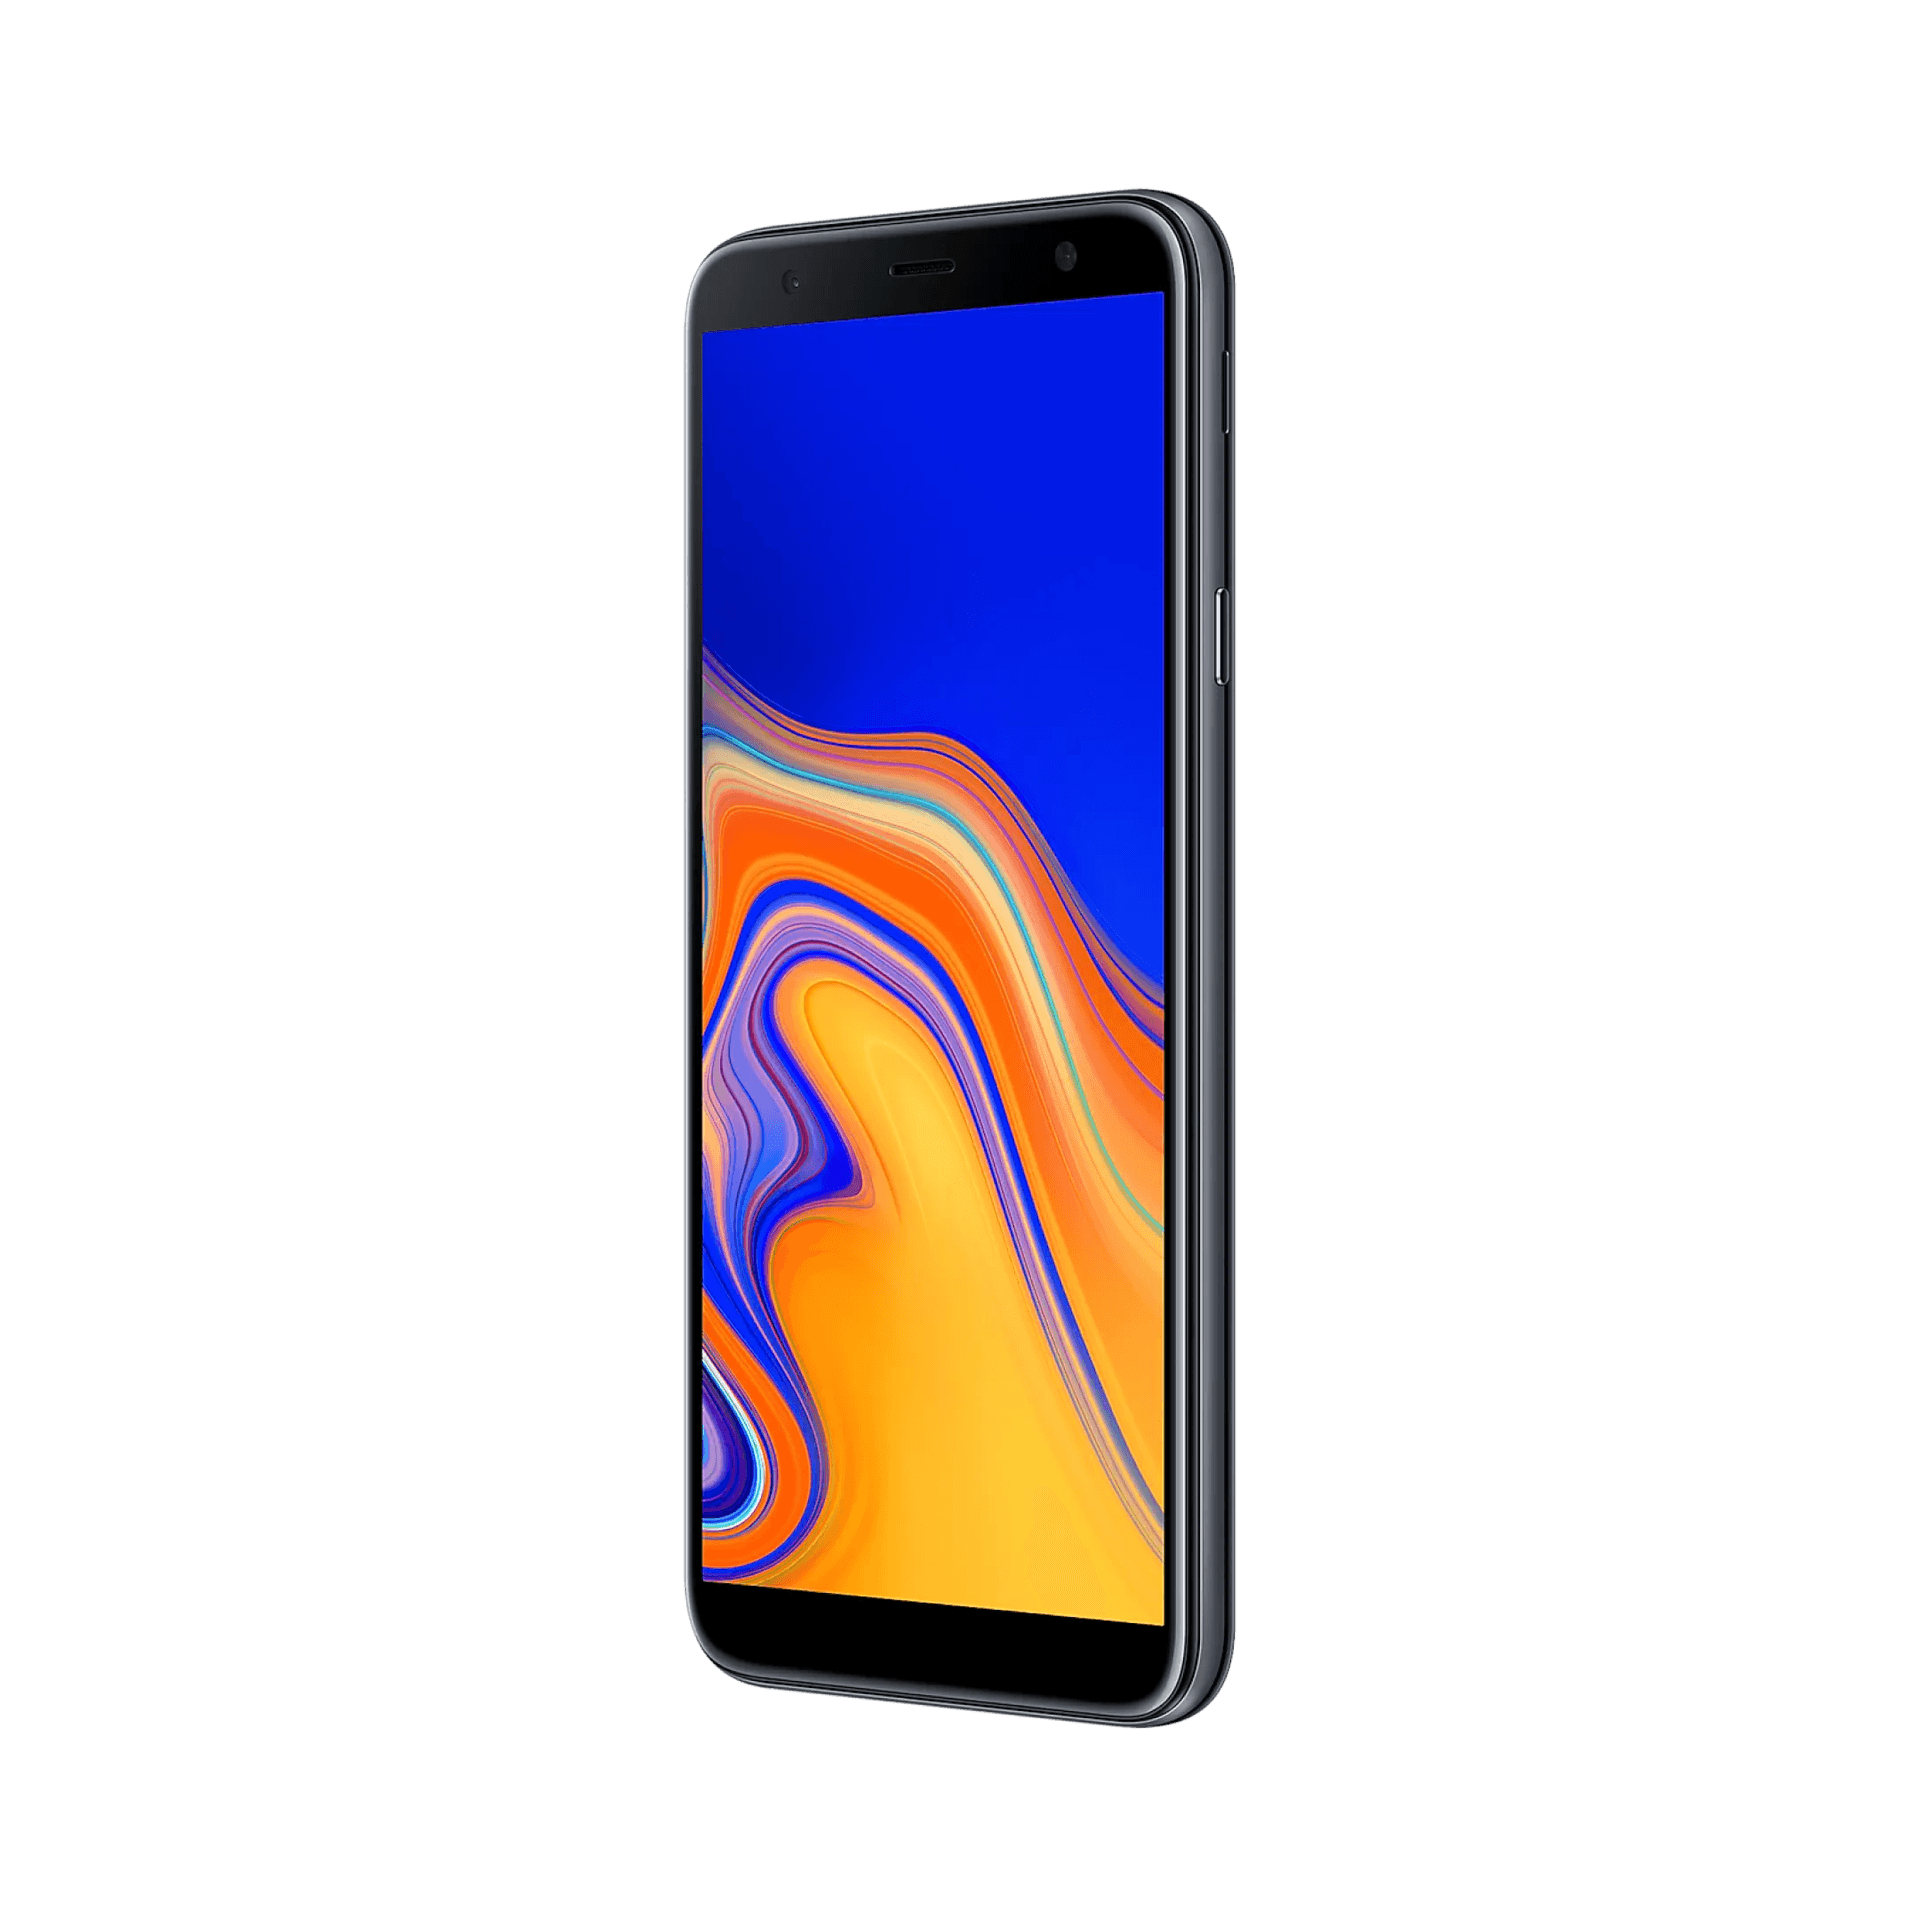 Samsung Galaxy J4 Plus - 16 GB - Siyah